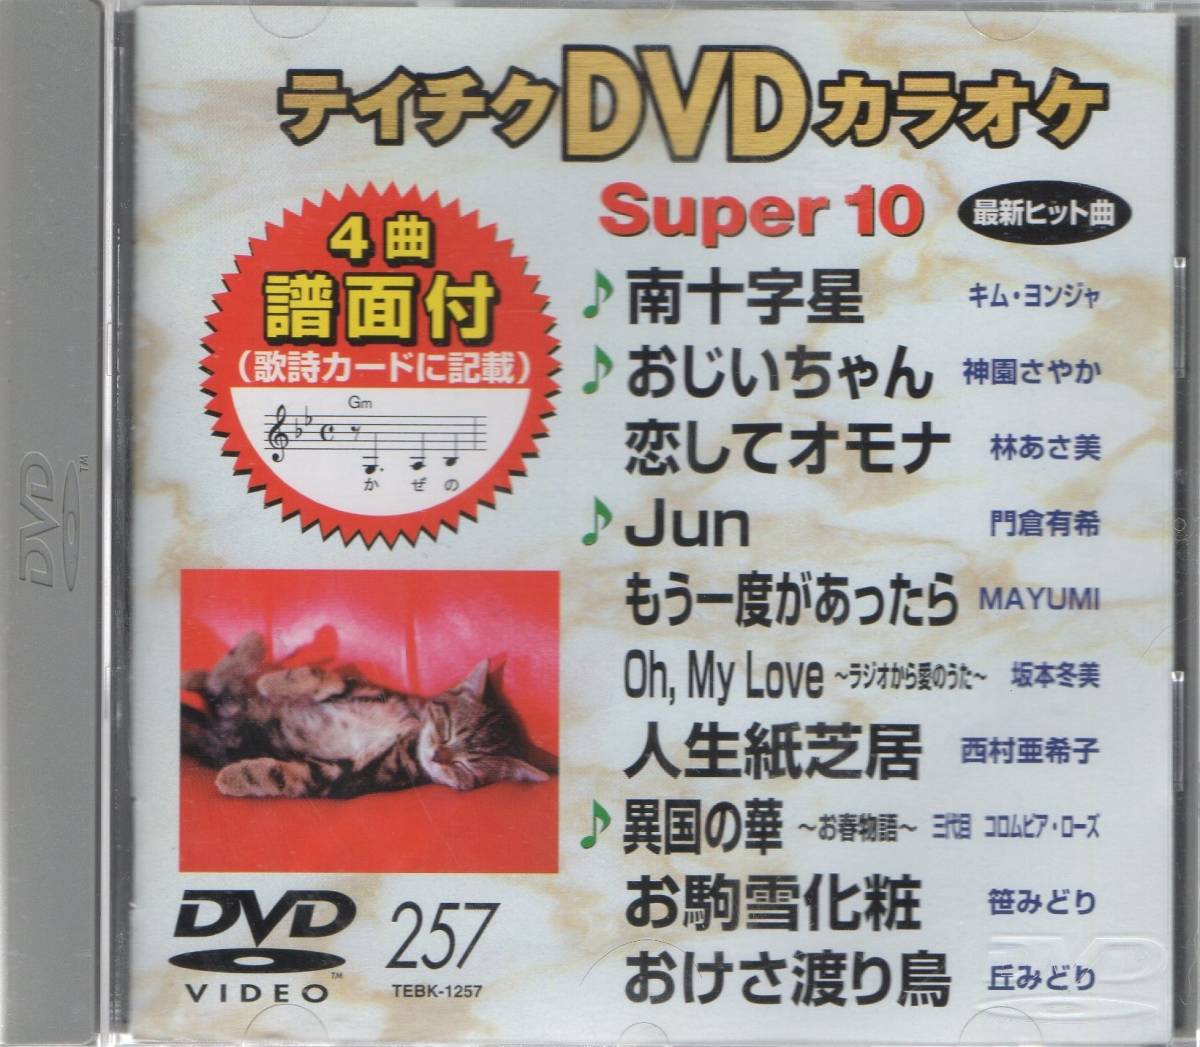  Tey chikDVD karaoke super 10 enka compilation Vol.257